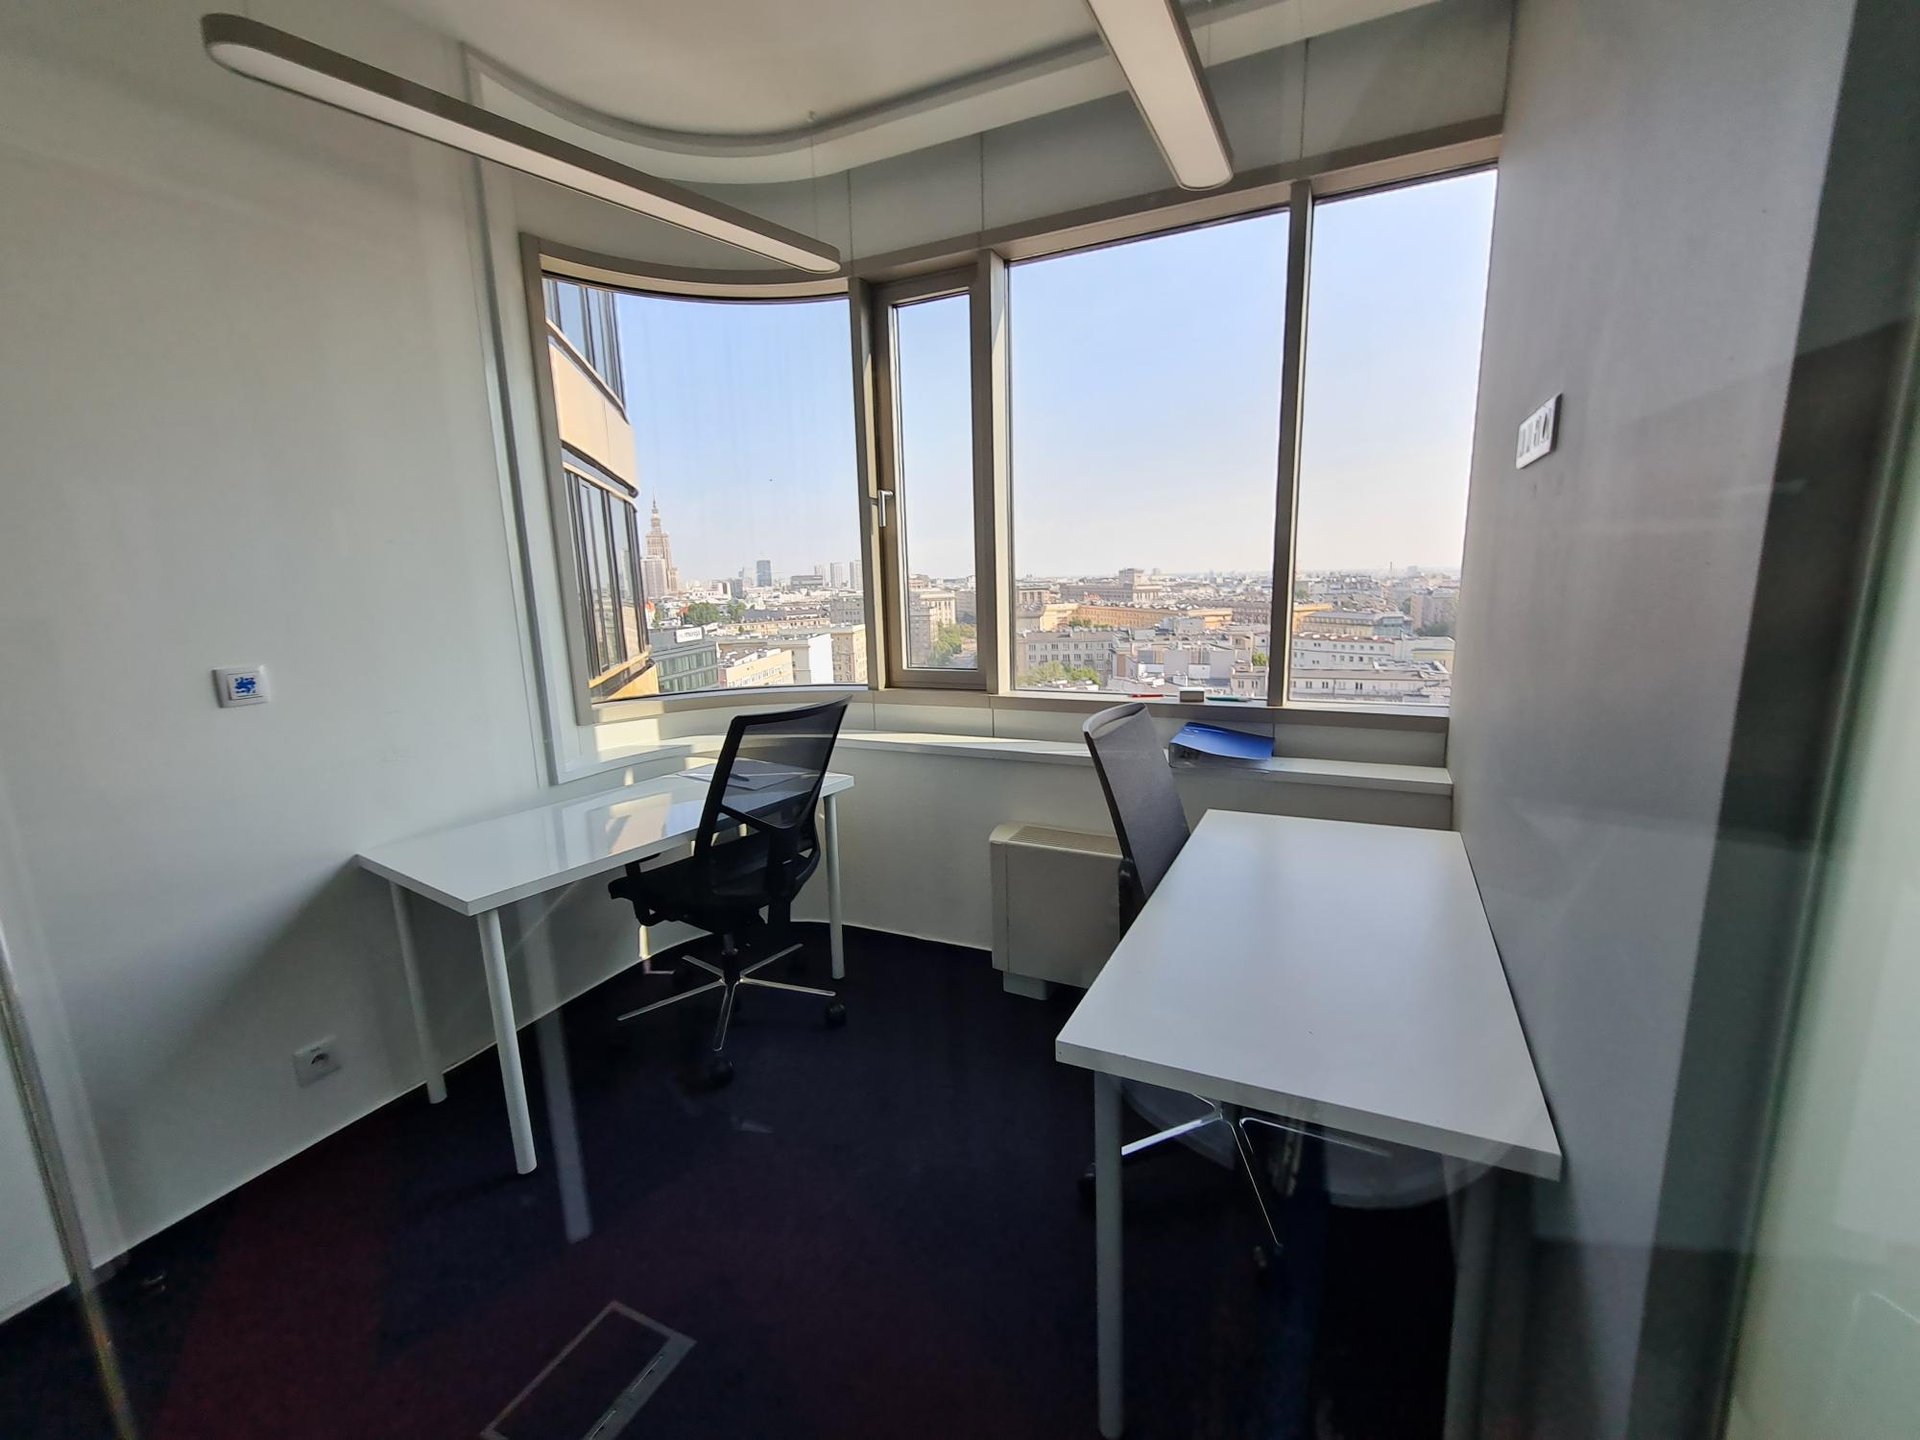 2 fős iroda itt: Zebra White beIN Offices powered by BiznesHub